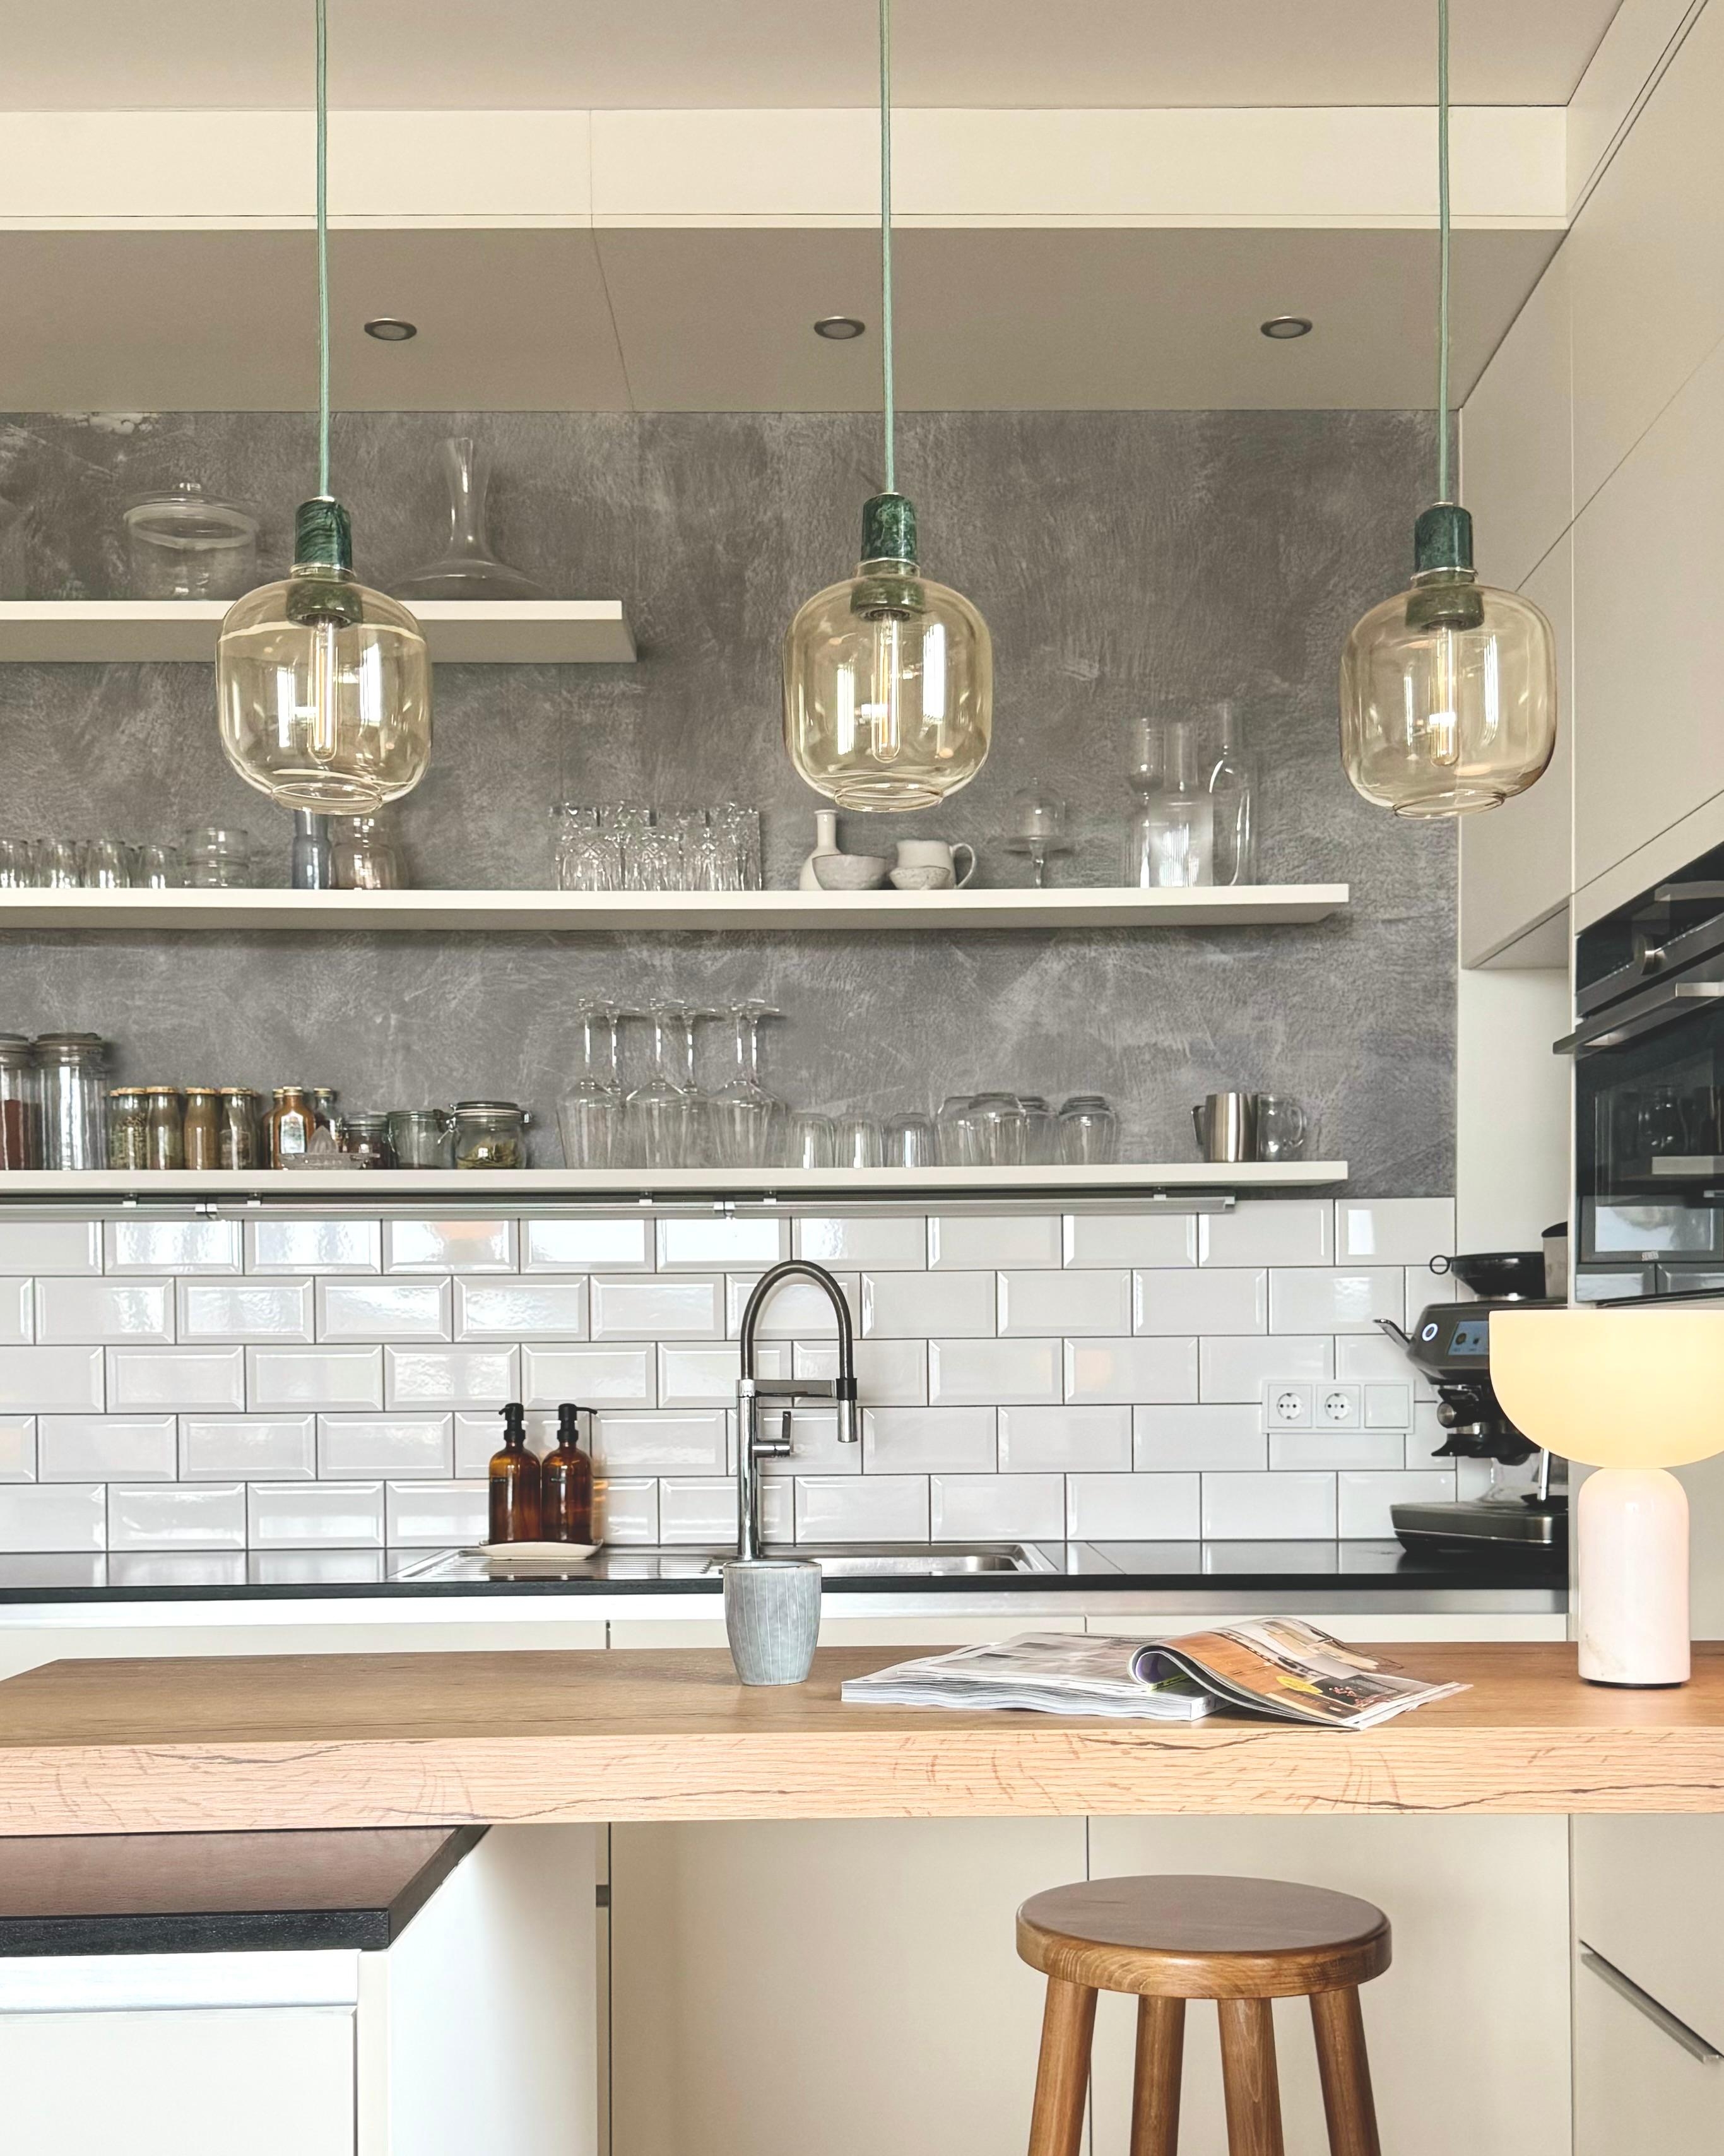 #küche #bar #kizu #industrial #metrofliesen #granit #beton #sichtbeton #kaffee #keramik #lampe